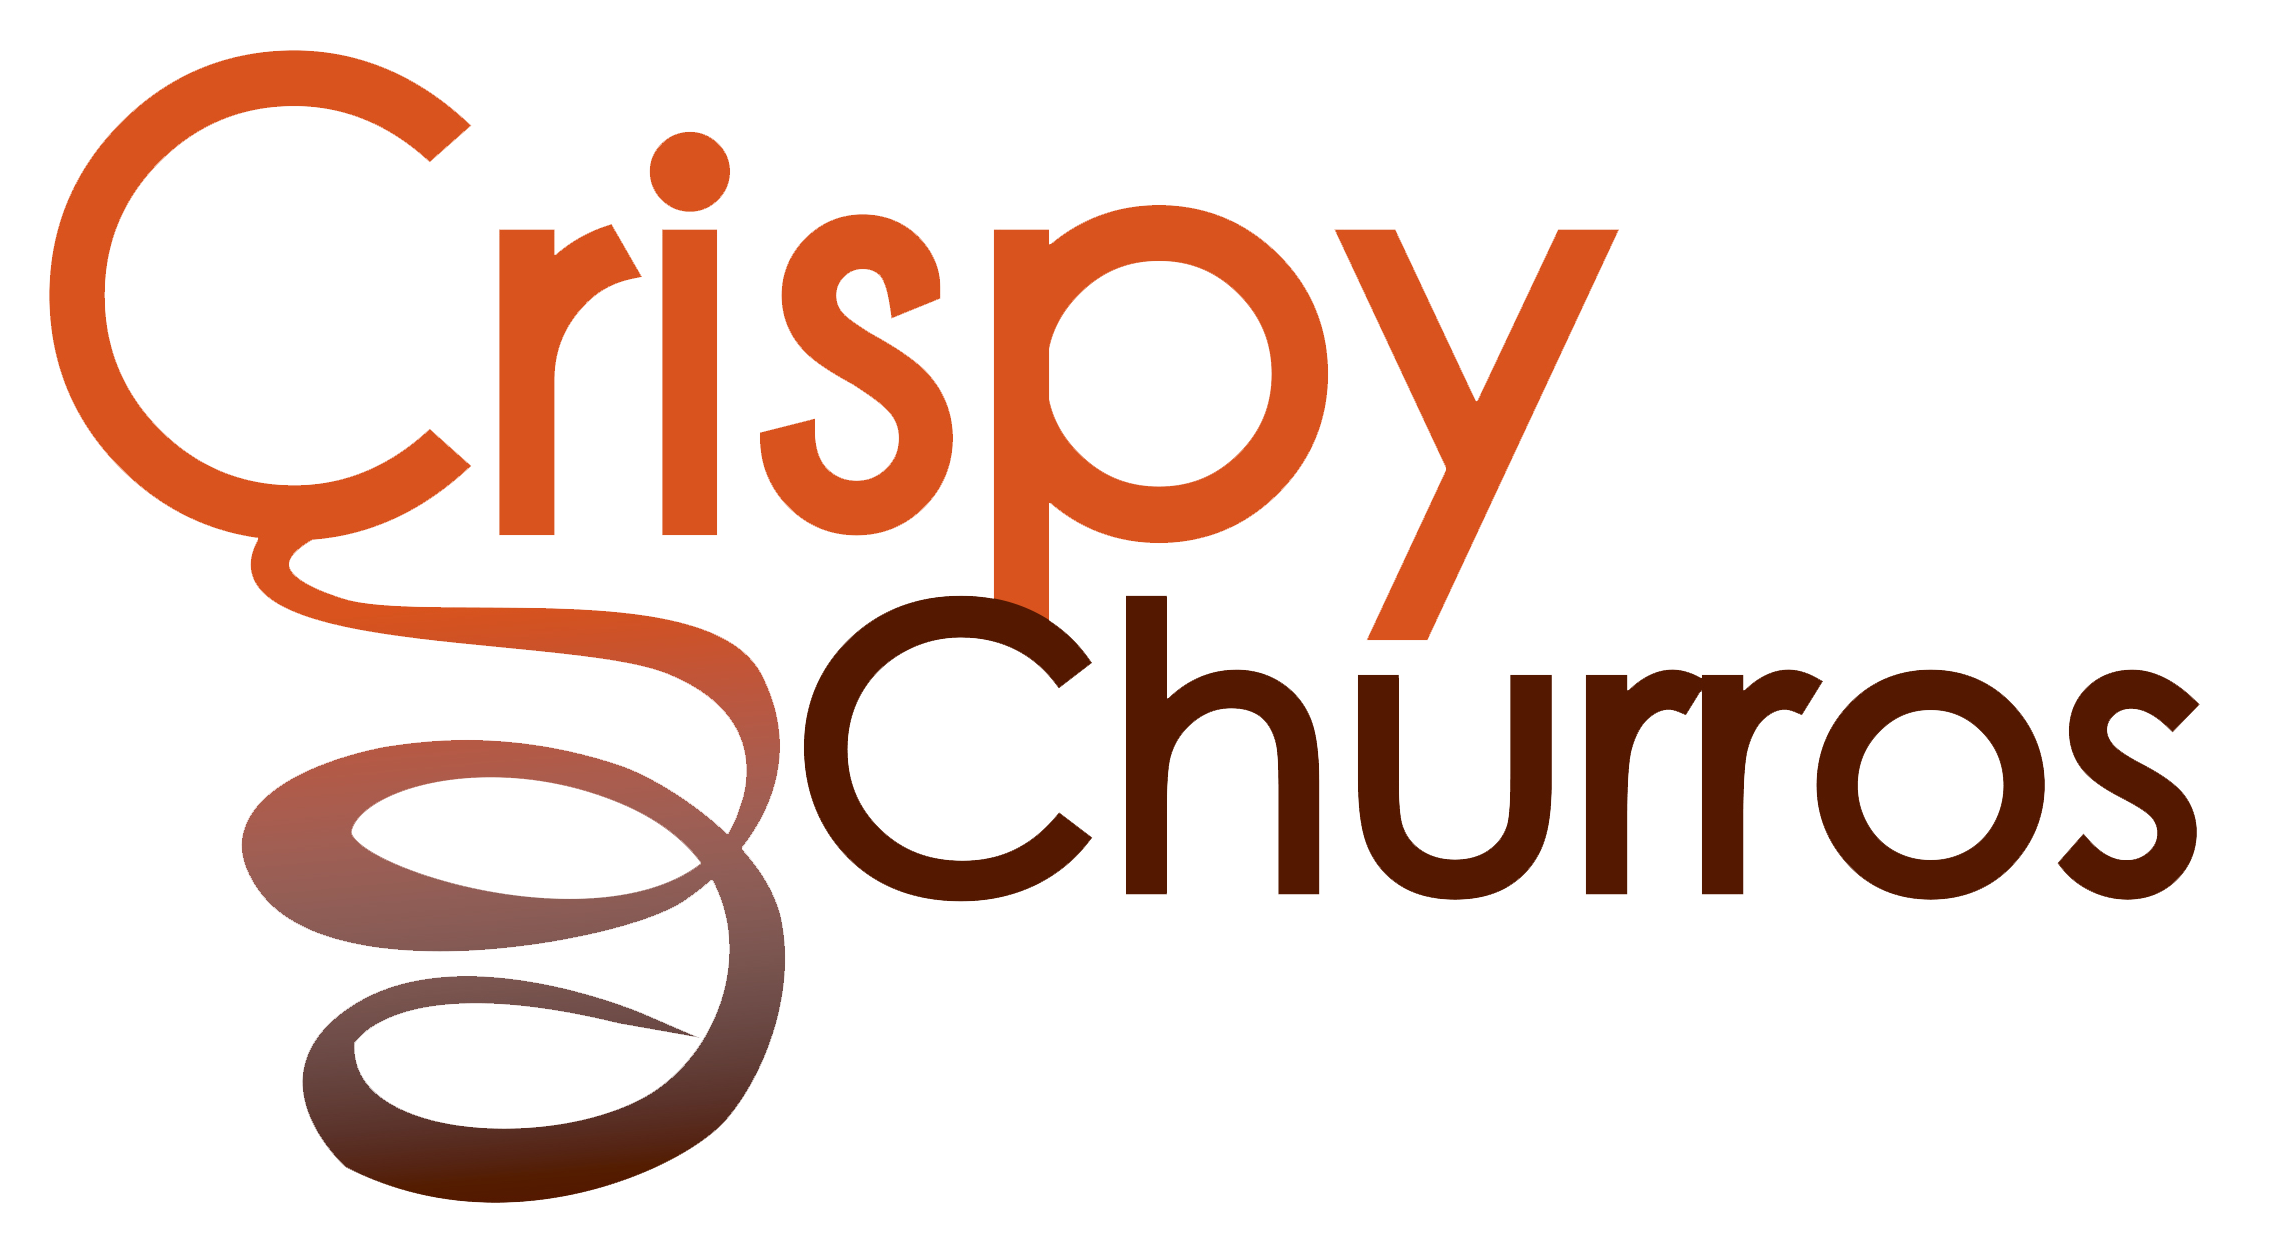 Crispy Churros